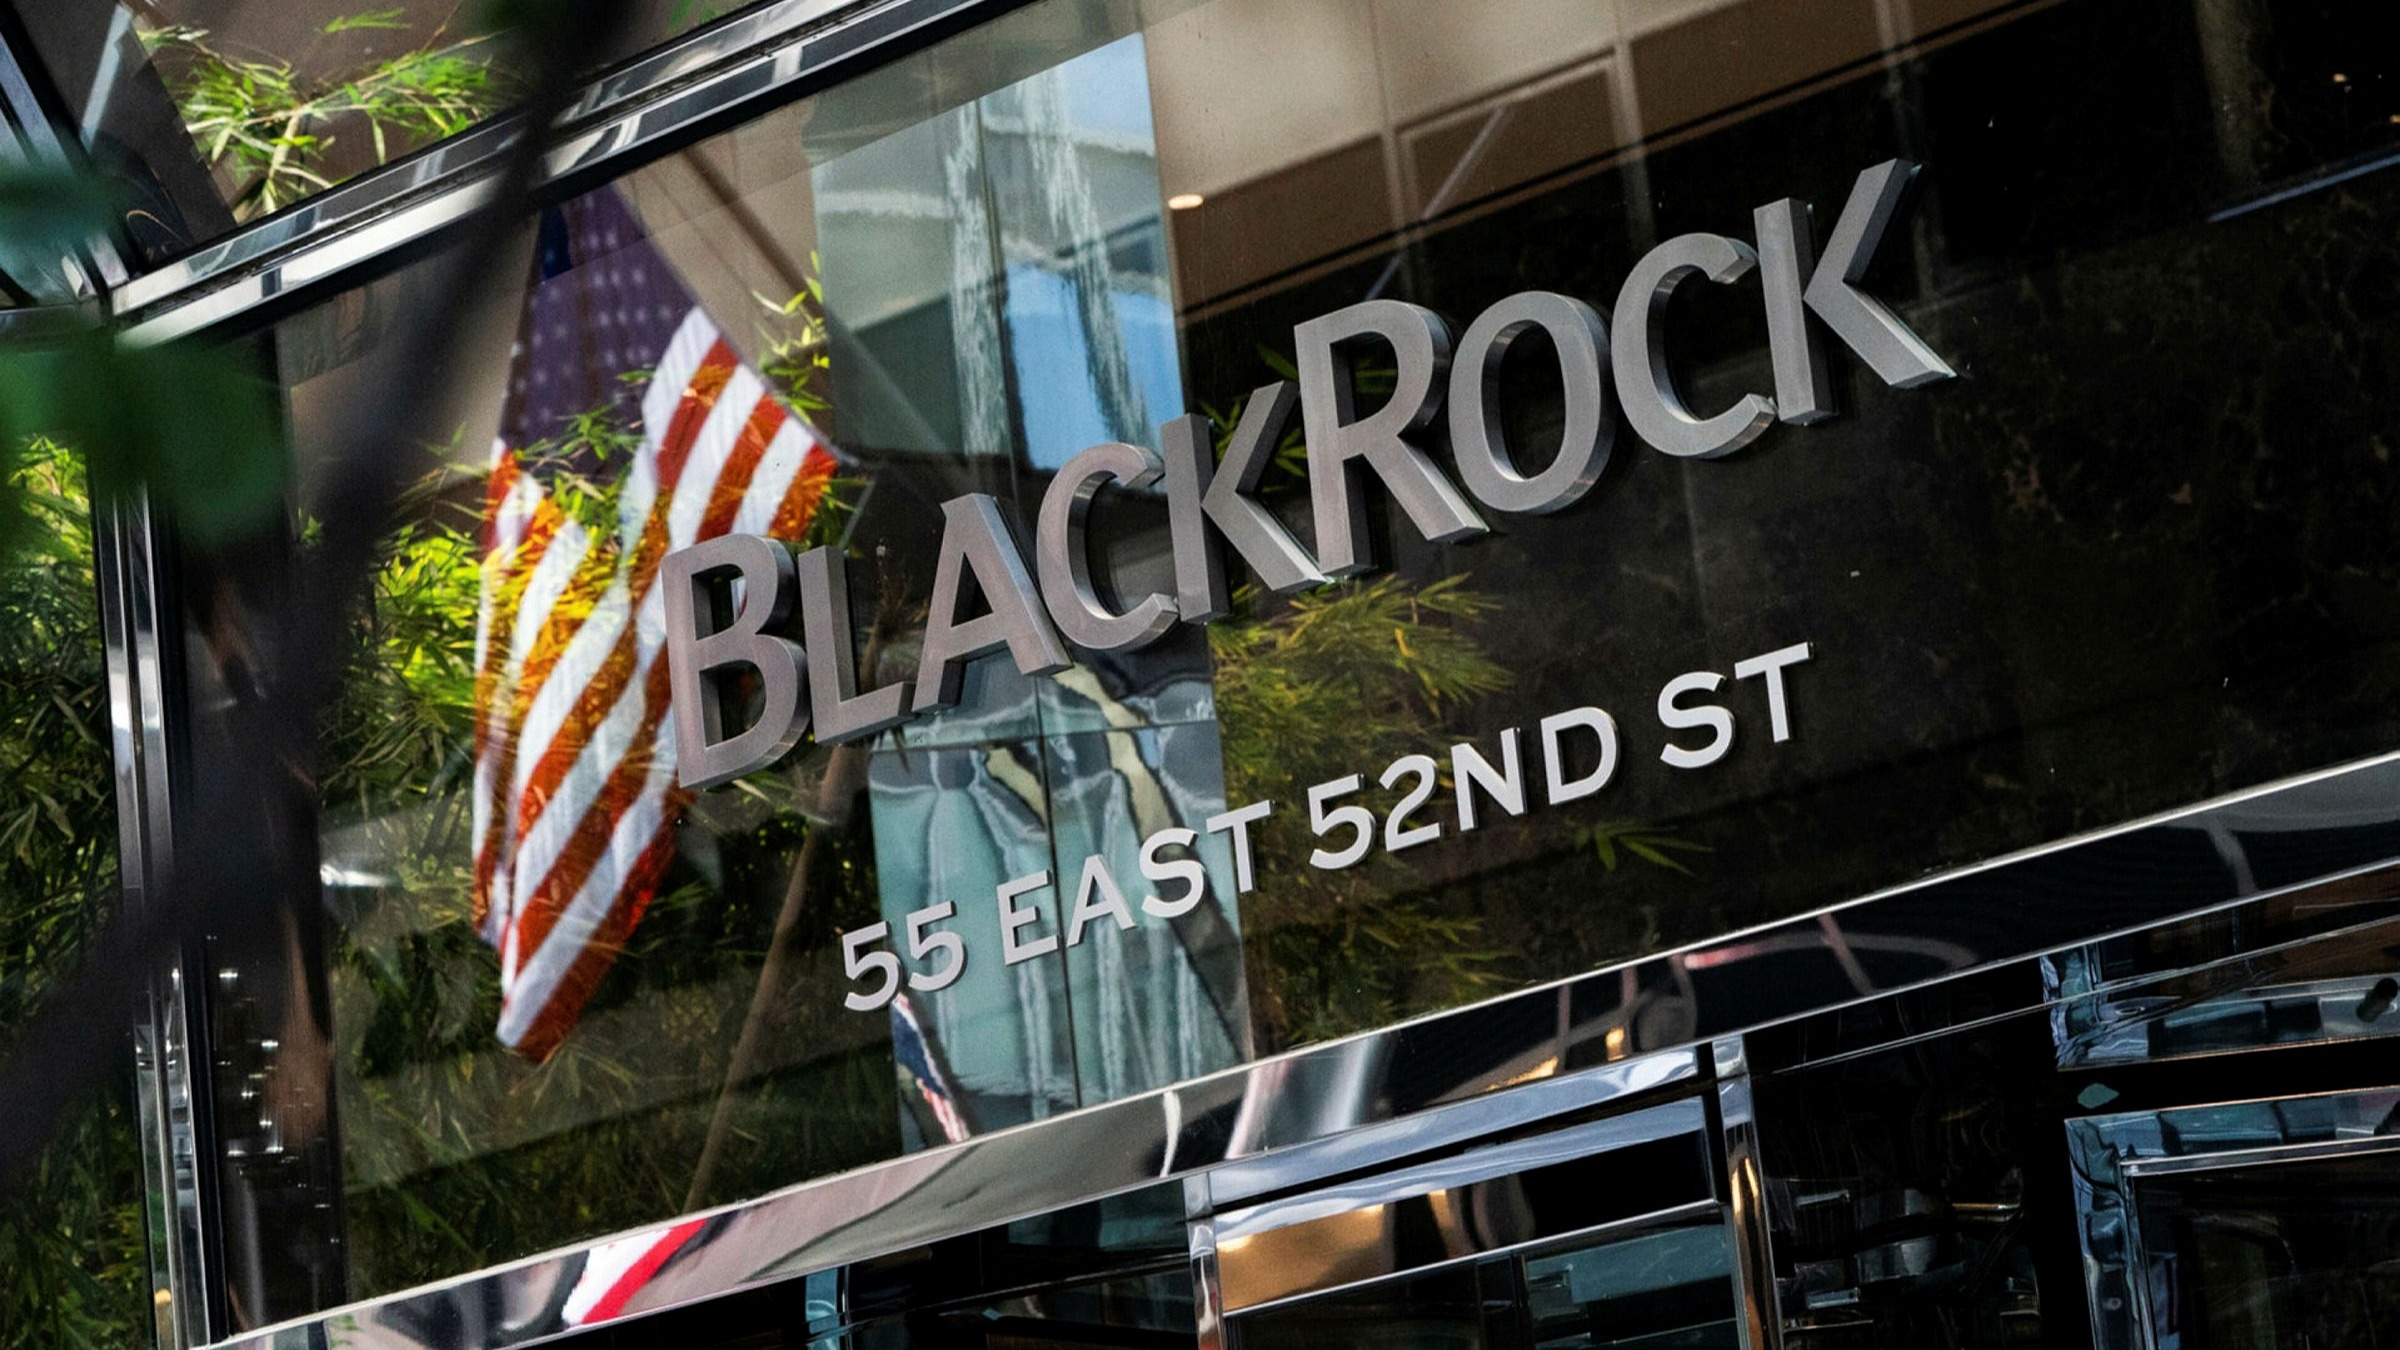 Generation blackrock technology next BlackRock Global